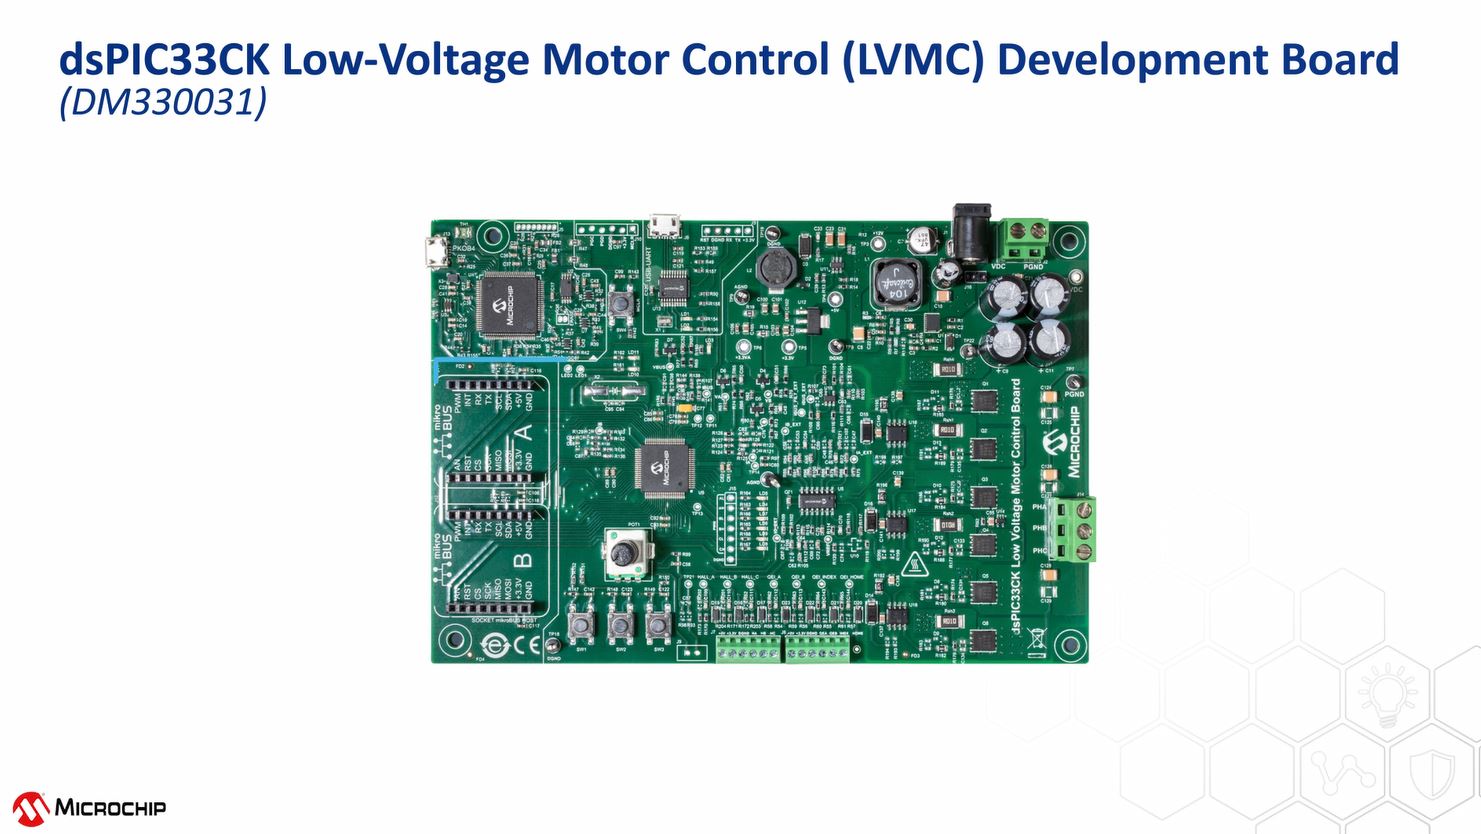 Microchip dsPIC33CK 低压电机控制（LVMC）开发板